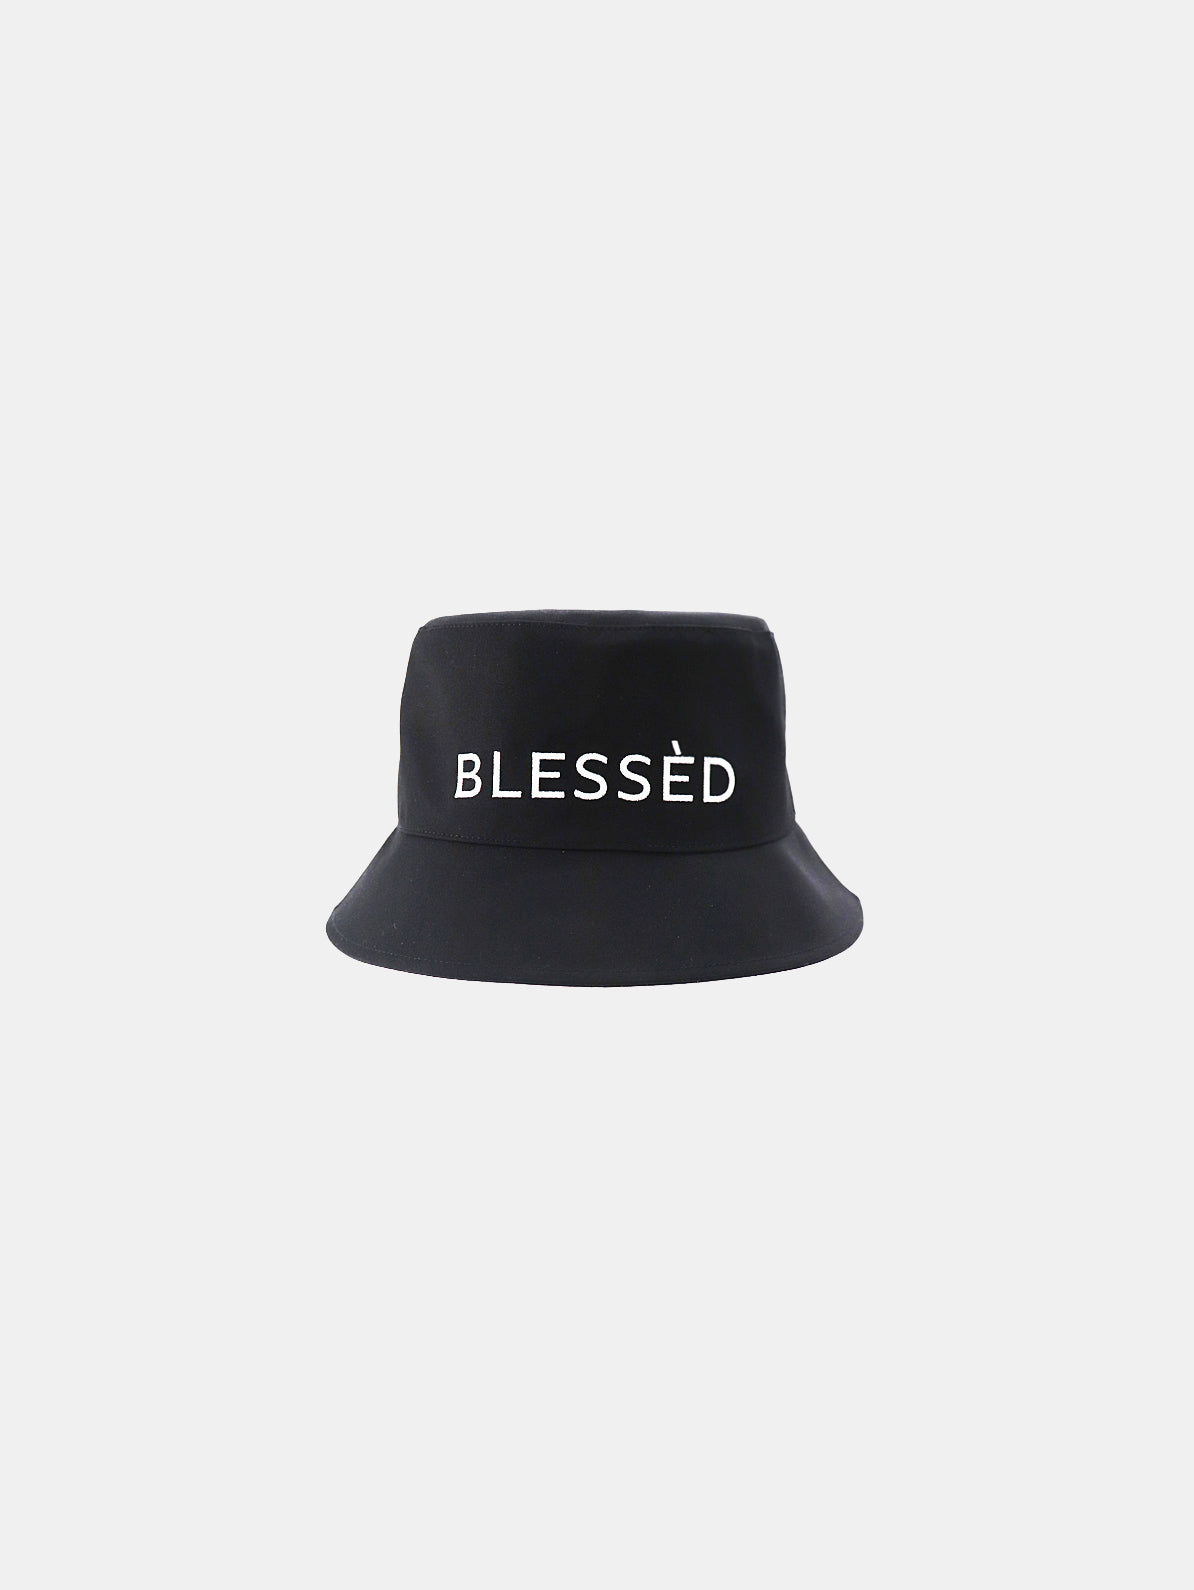 Blessèd Bucket Hat